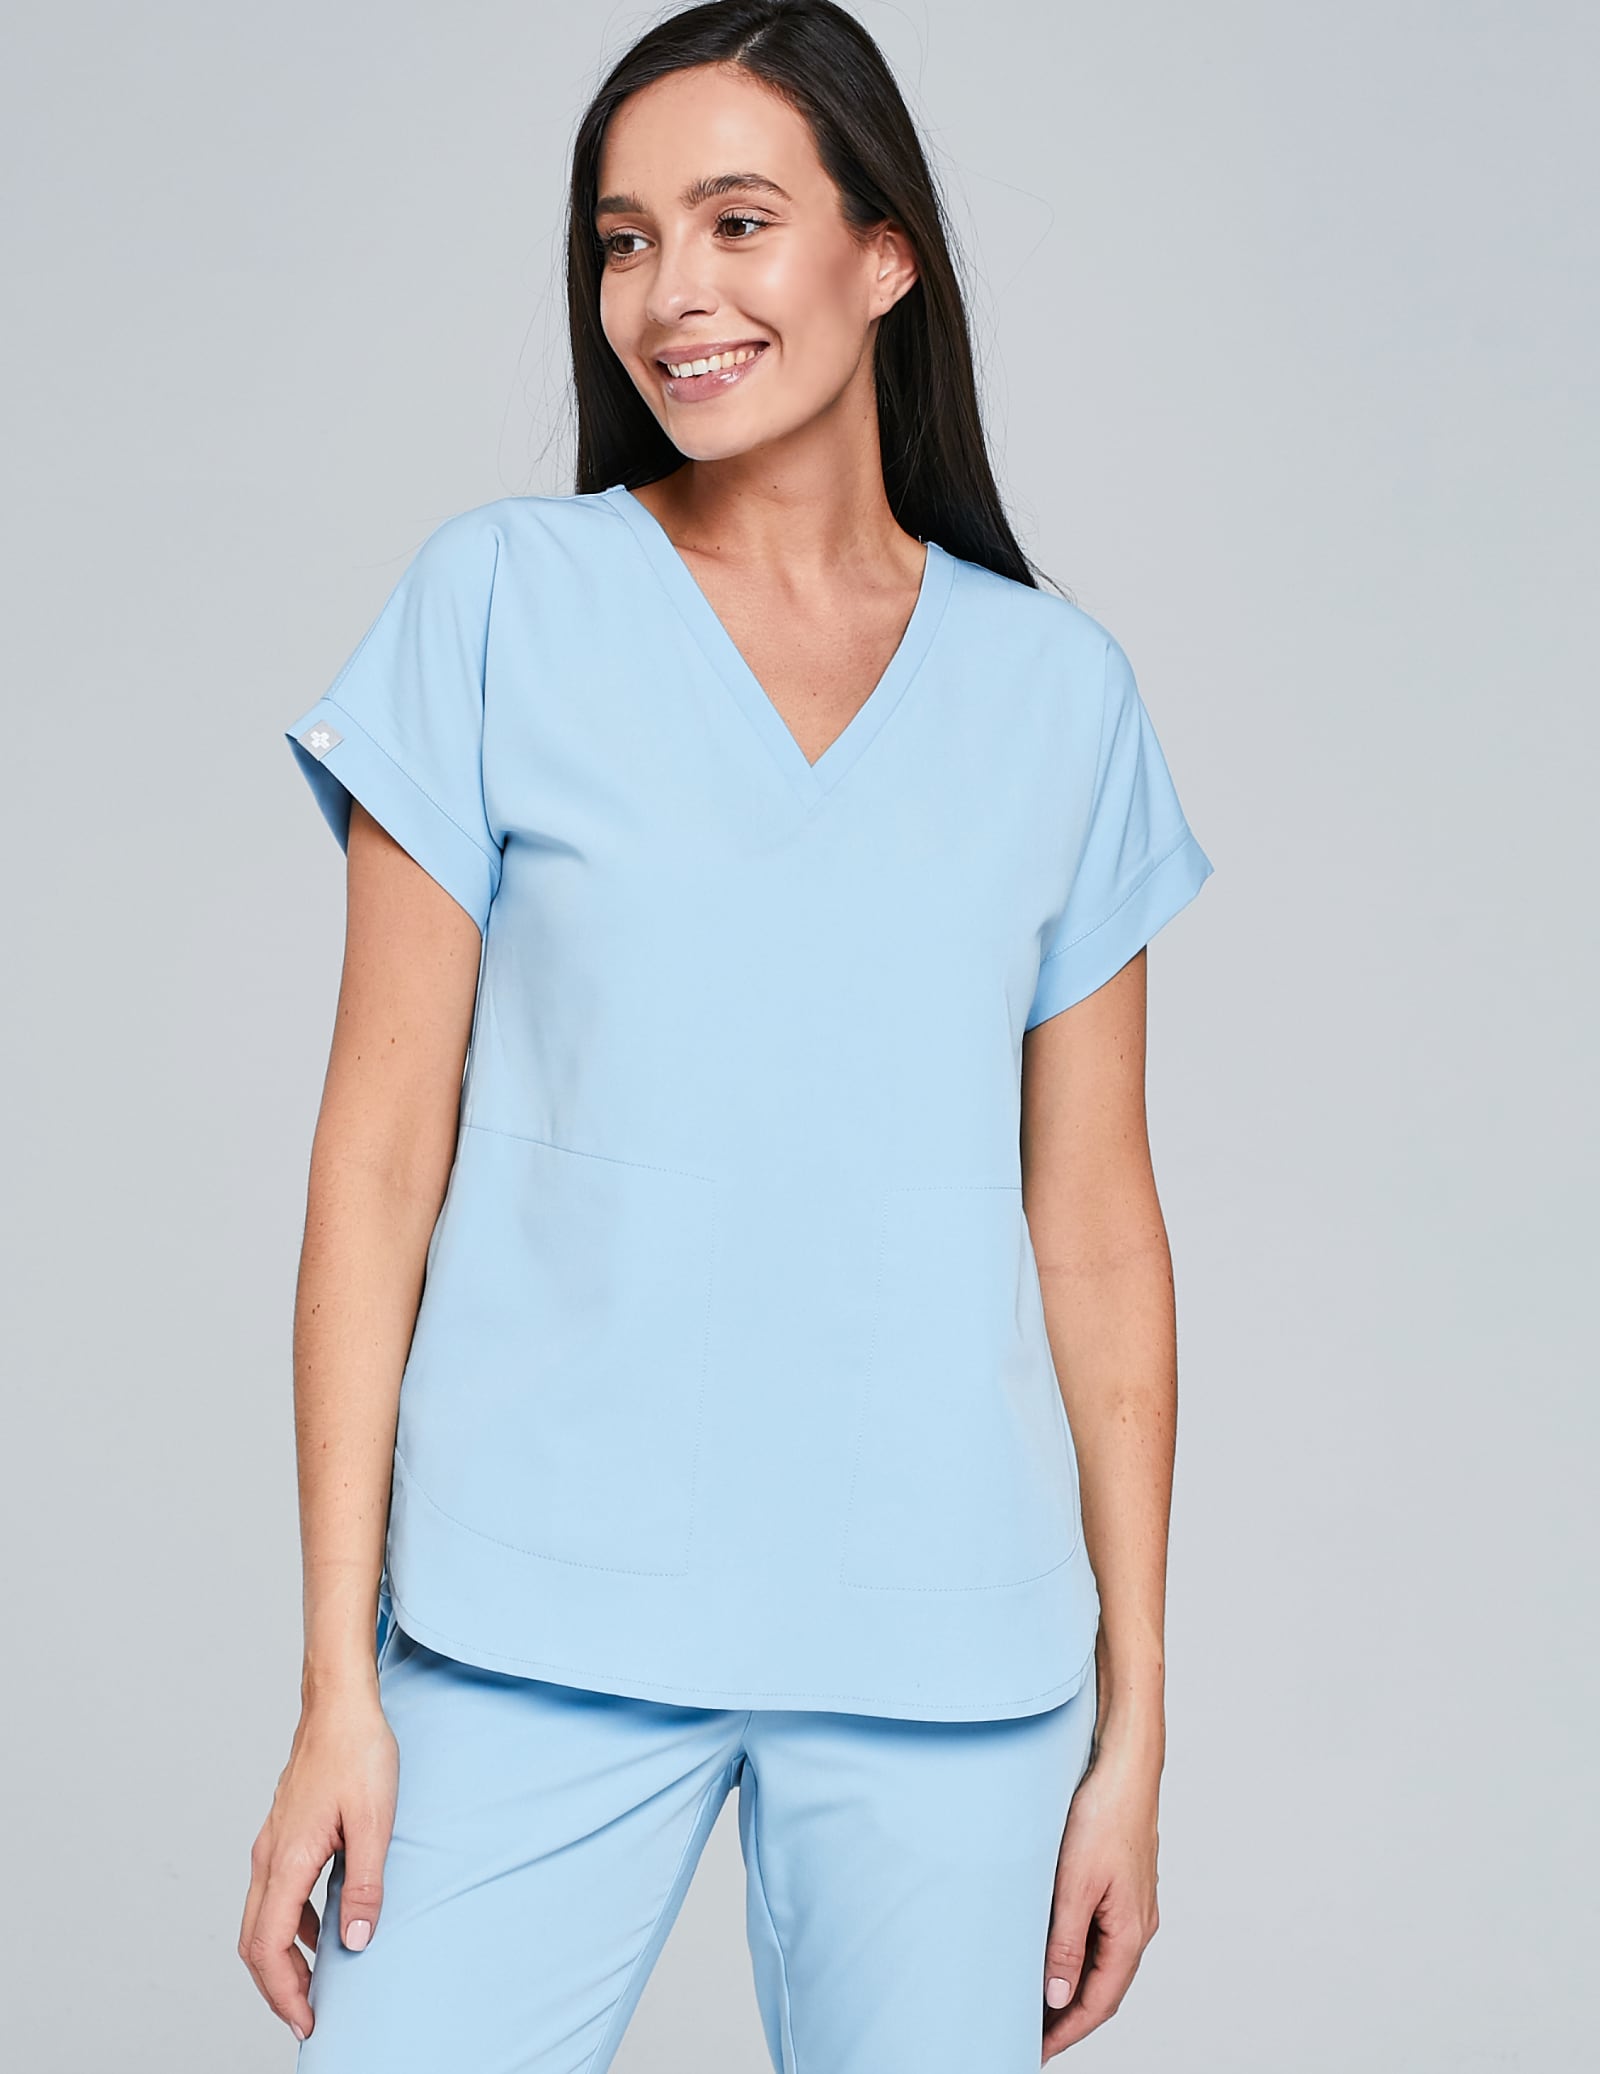 Bluza Medyczna Kendall - SKY BLUE